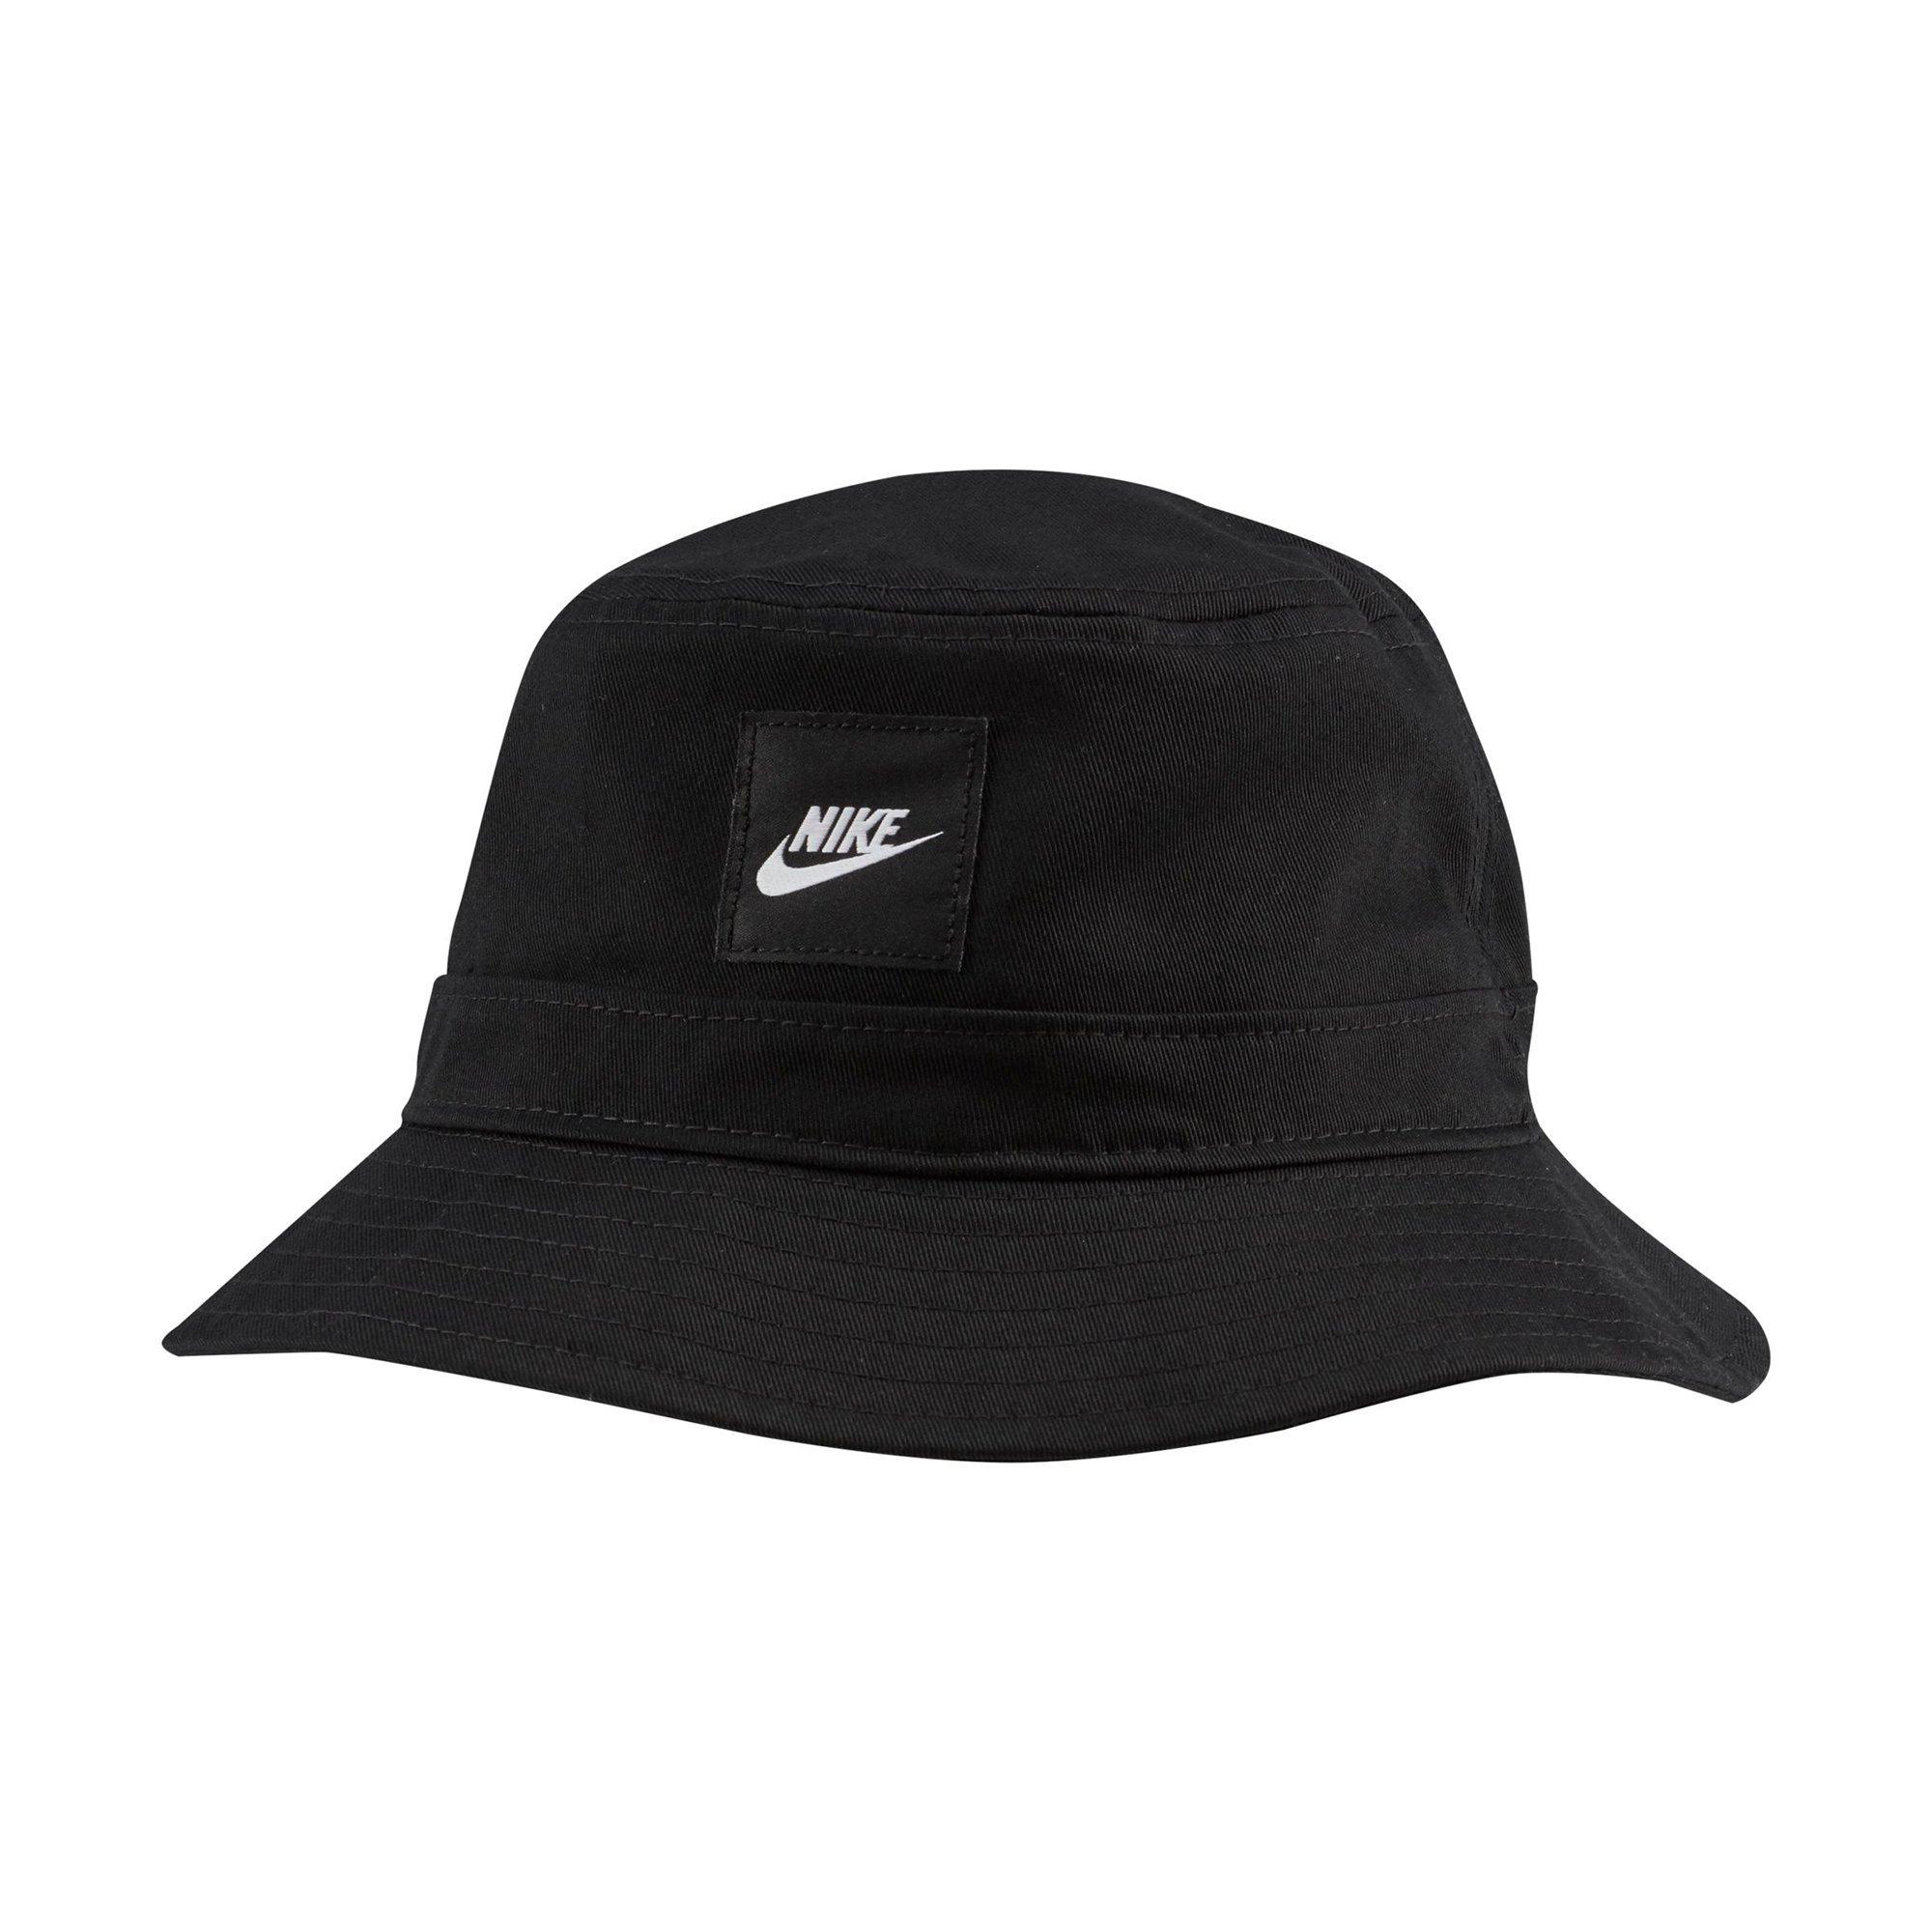 Gewend aan achterstalligheid Geologie Nike Sportswear Futura Core Bucket Hat - Black